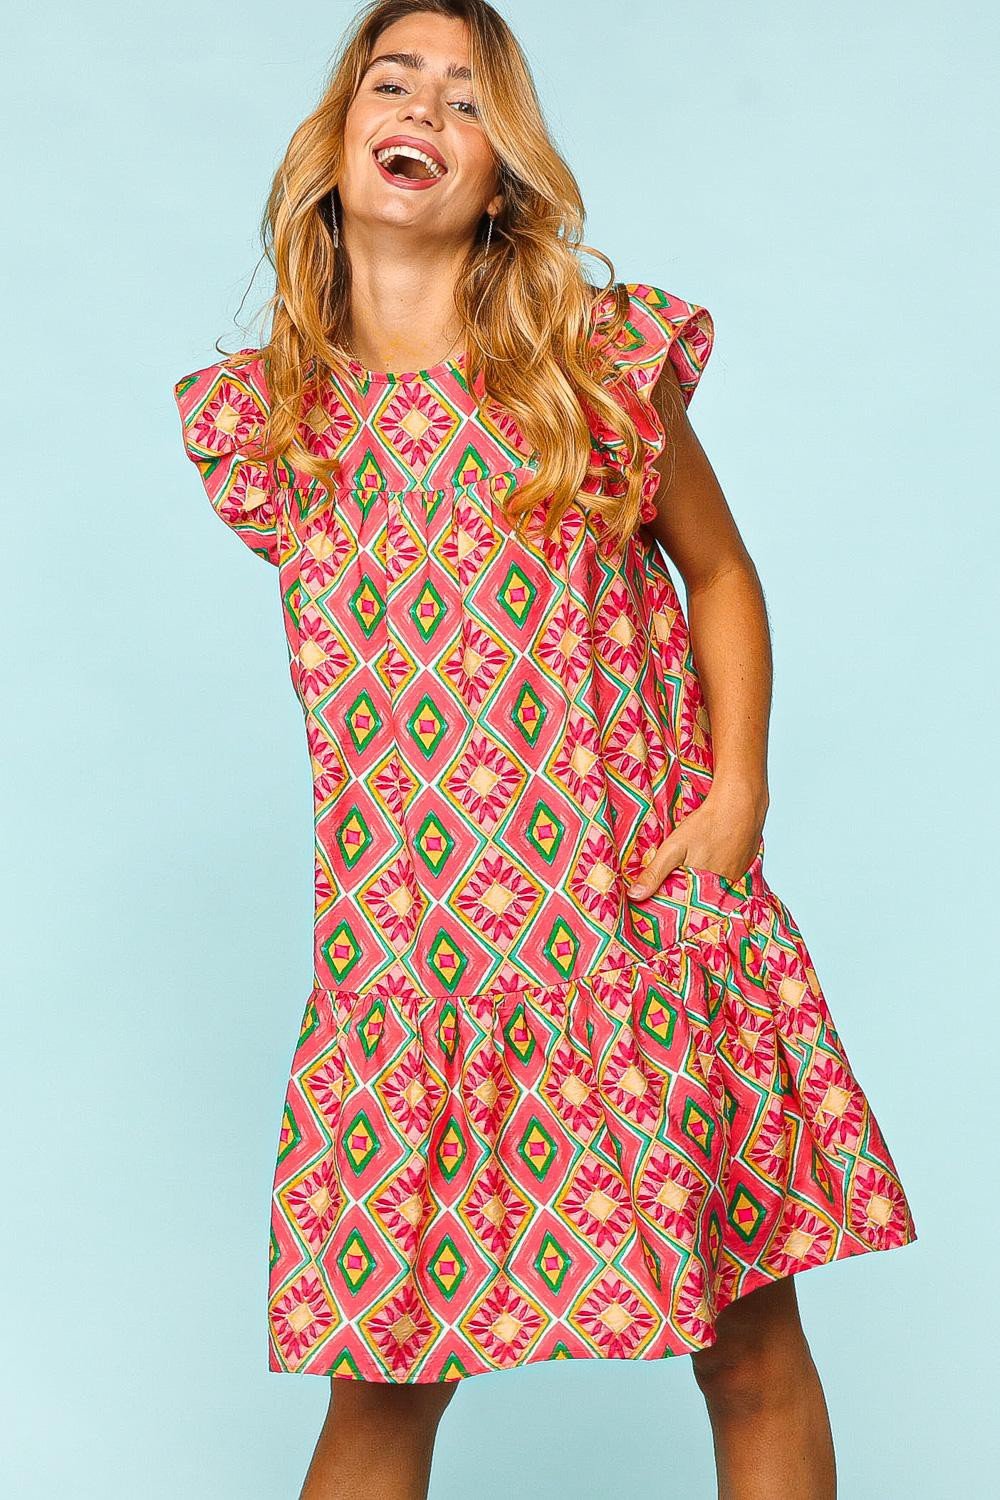 Ruffled Printed Mini Dress with Pockets in CoralMini DressHaptics